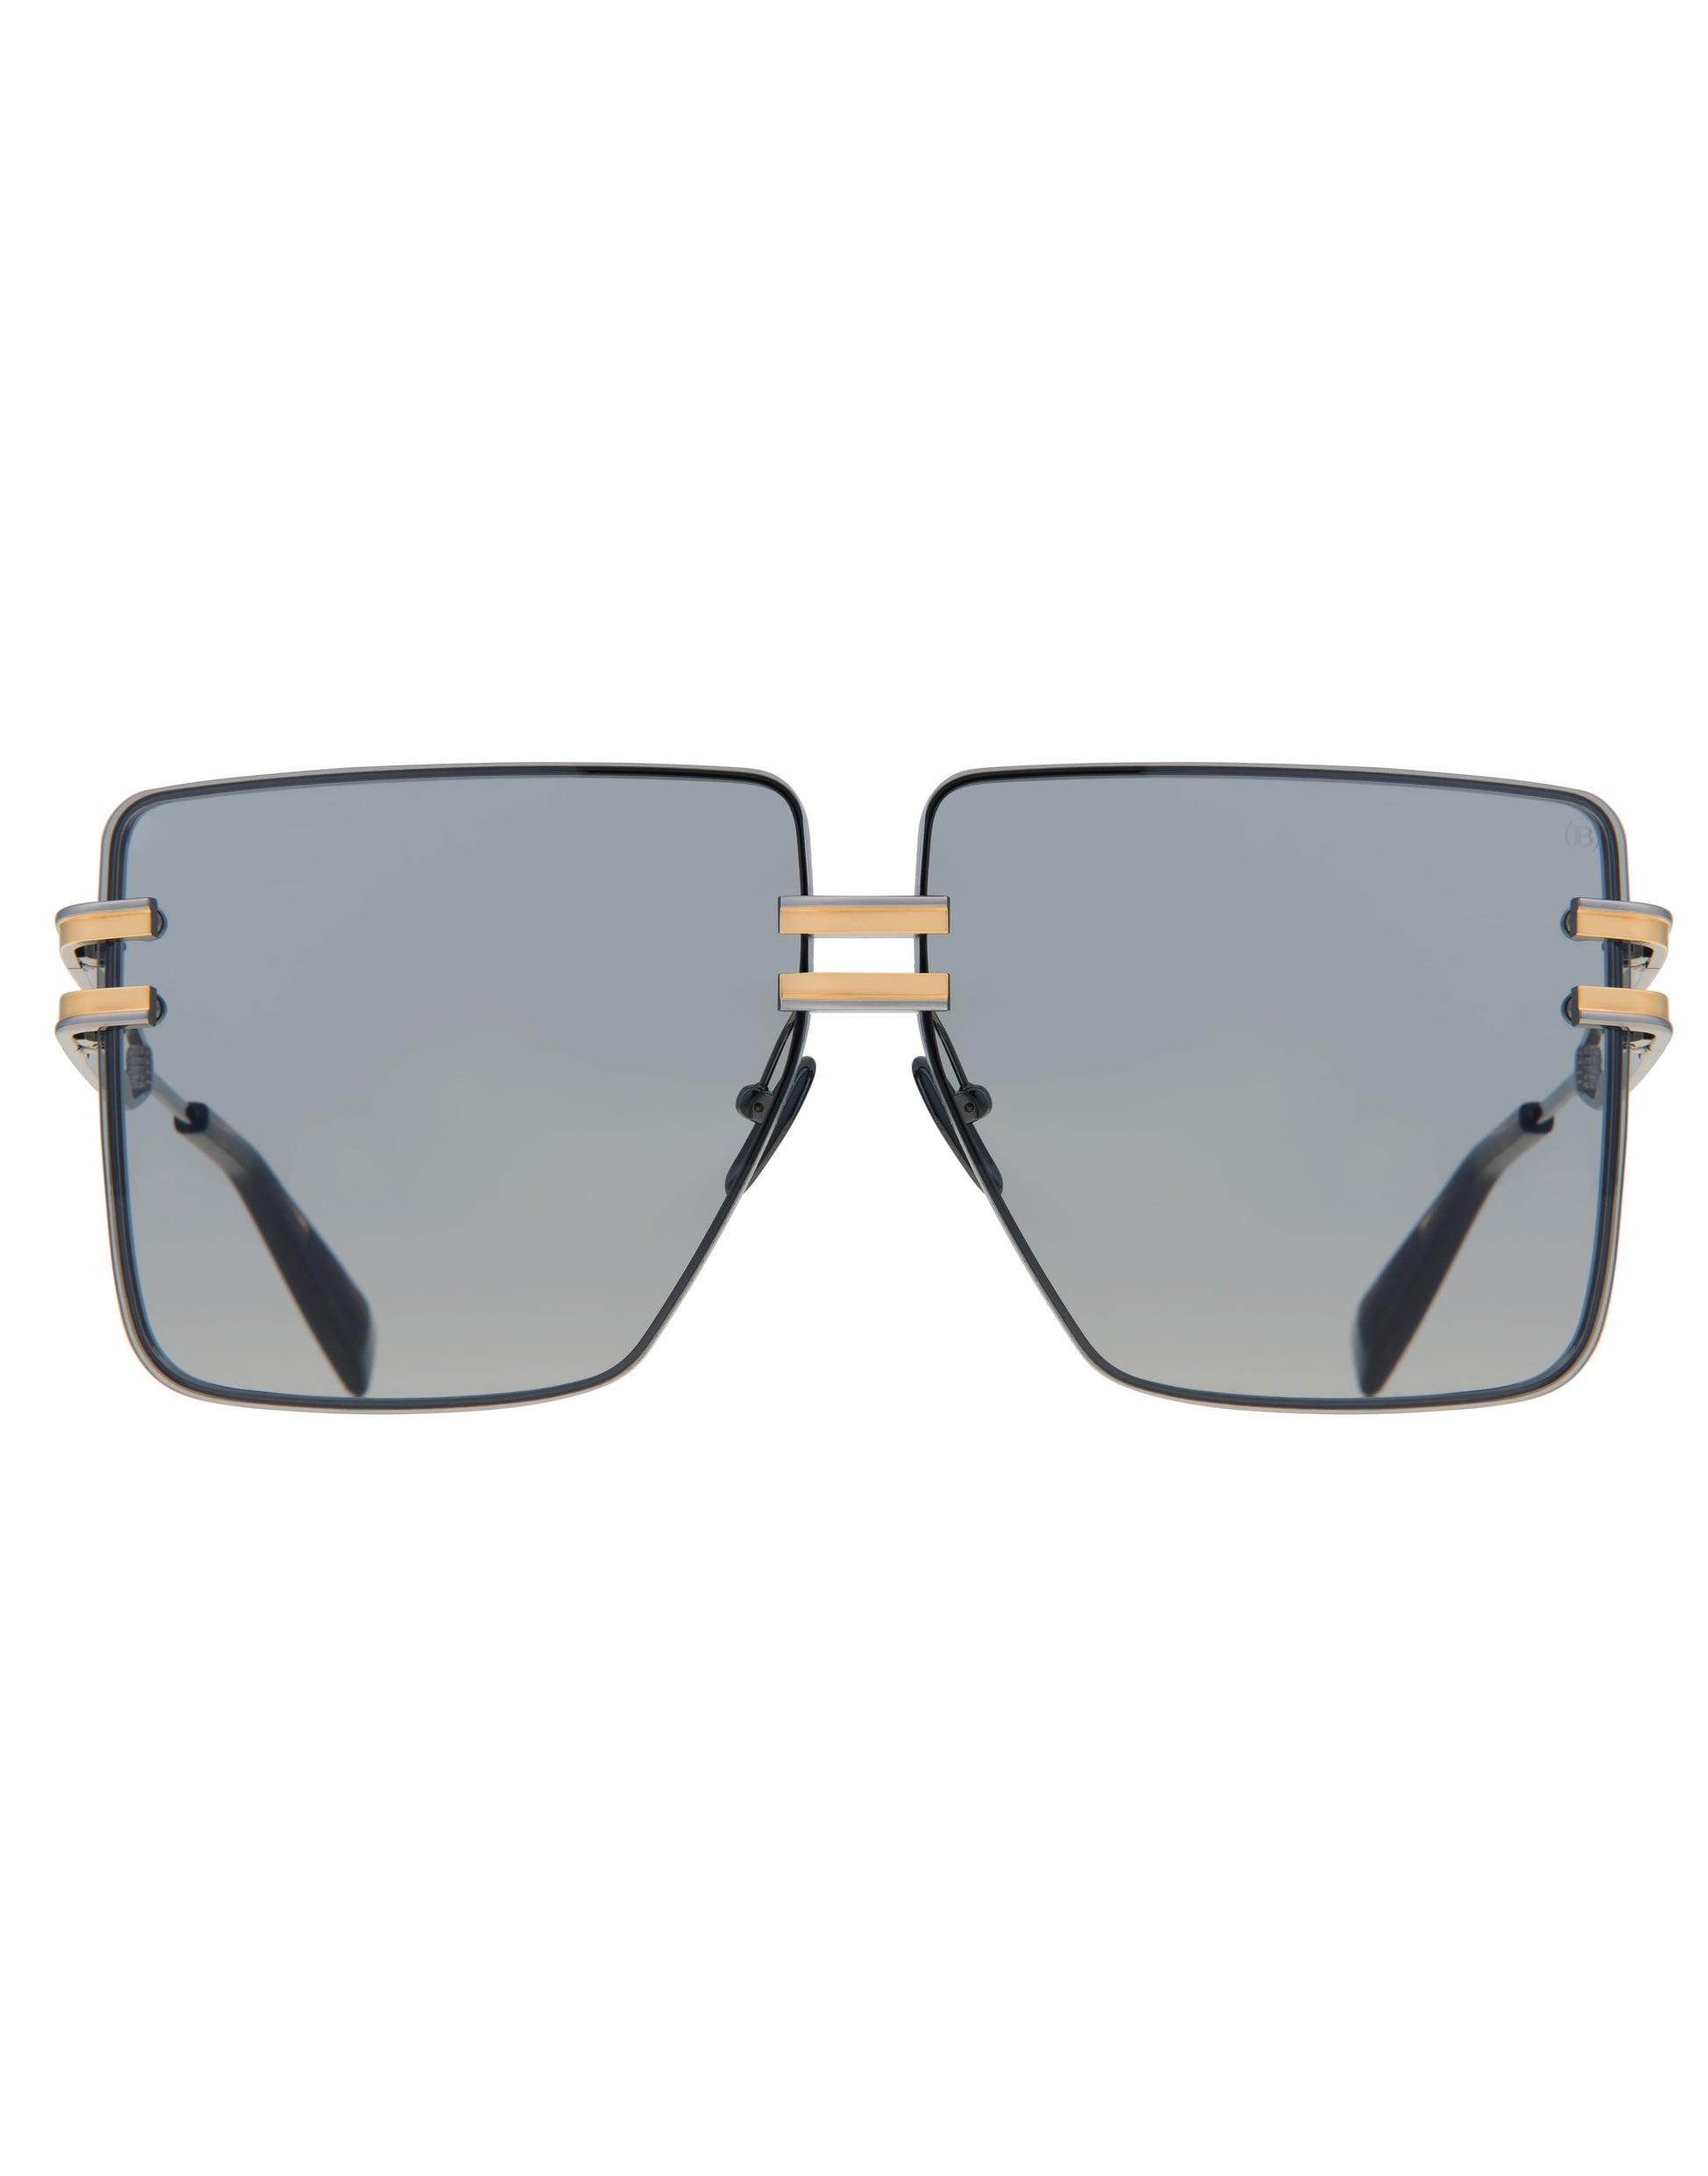 BALMAIN-Gendarme Black and Gold Unisex Sunglasses-BLK/SILV